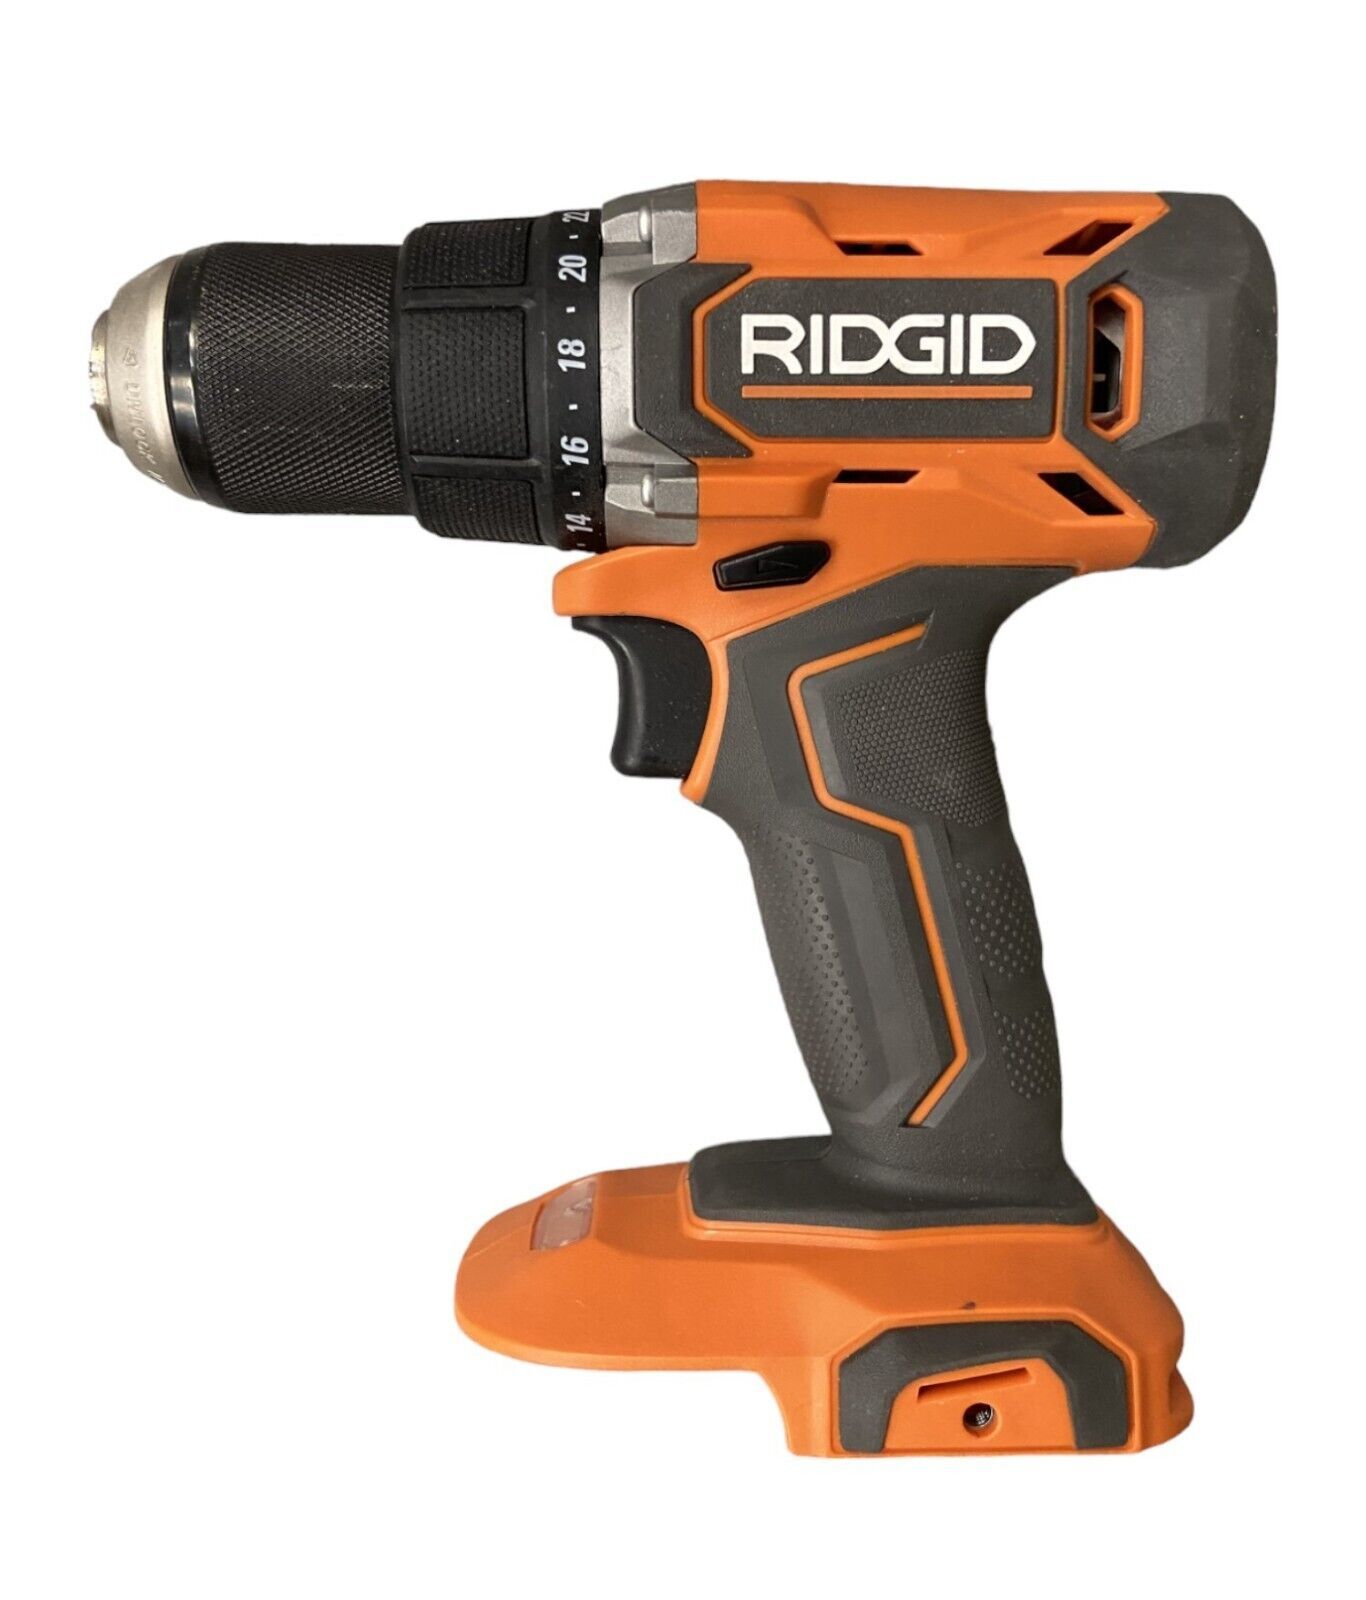 USED - RIDGID R860010 1/2" 18V 18Volt Drill/Driver (Tool Only) - $51.99